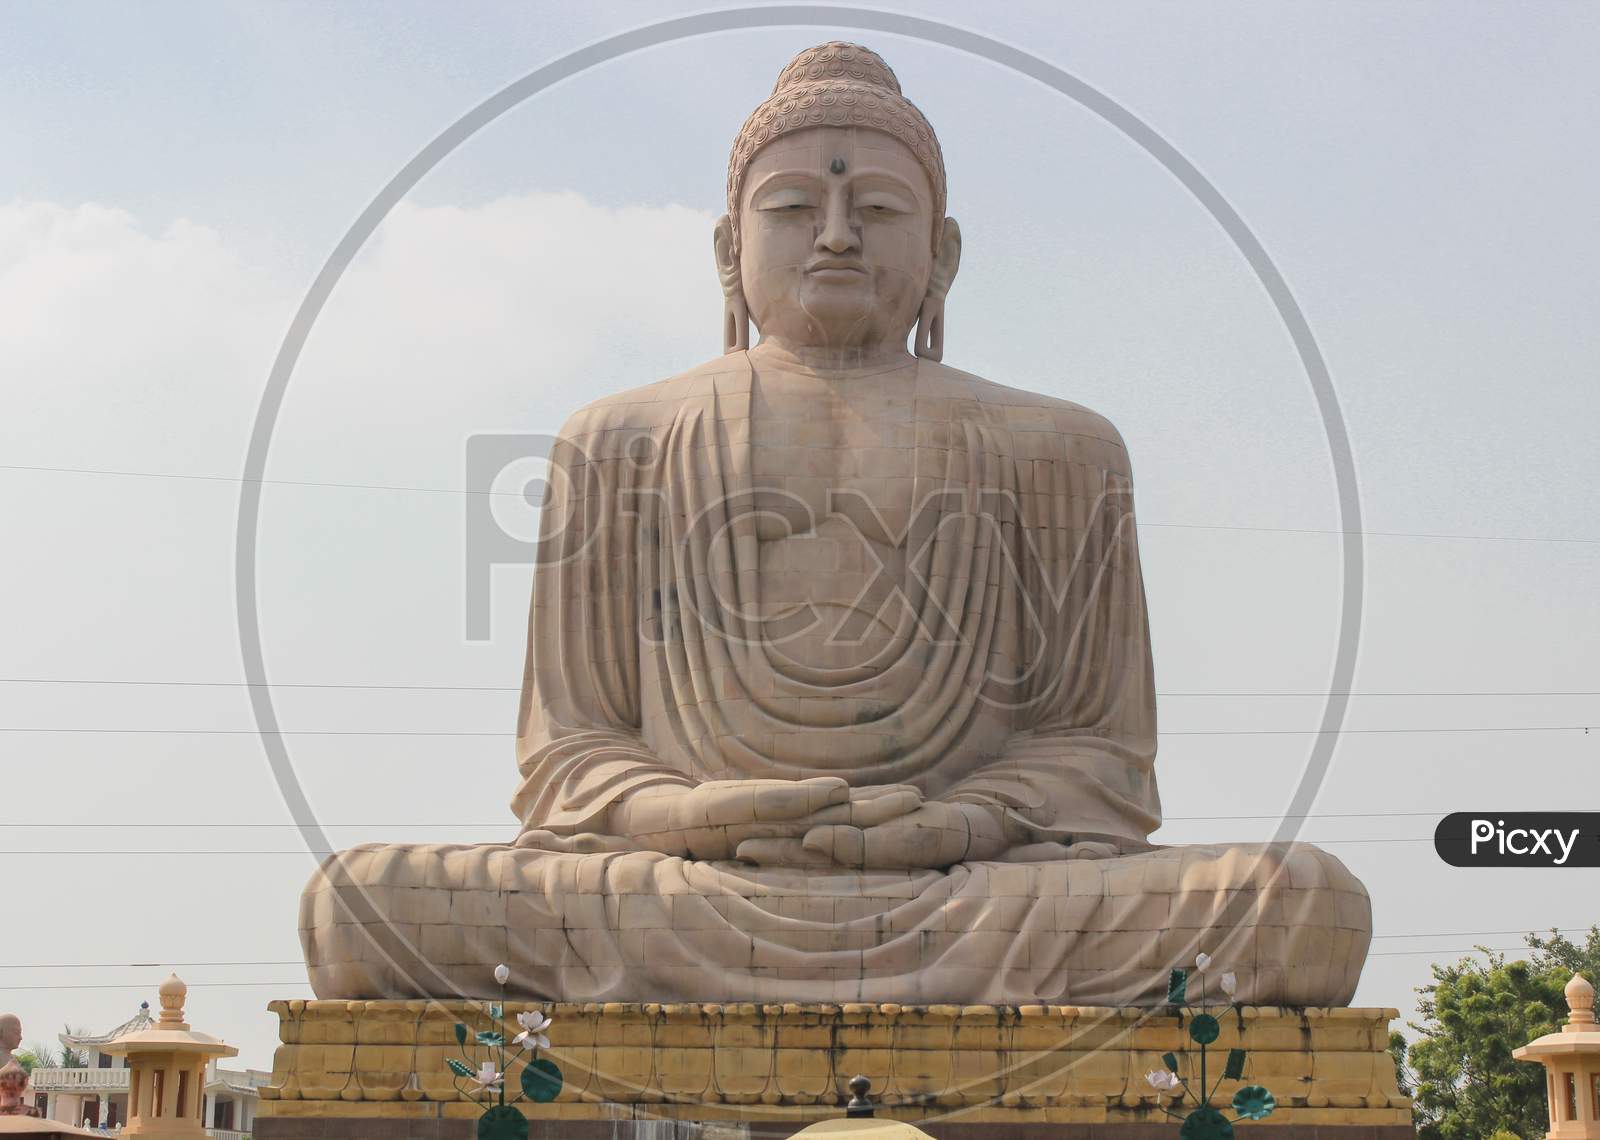 A close up shot of the mammoth Buddha statue in Bodhgaya in Bihar/India.